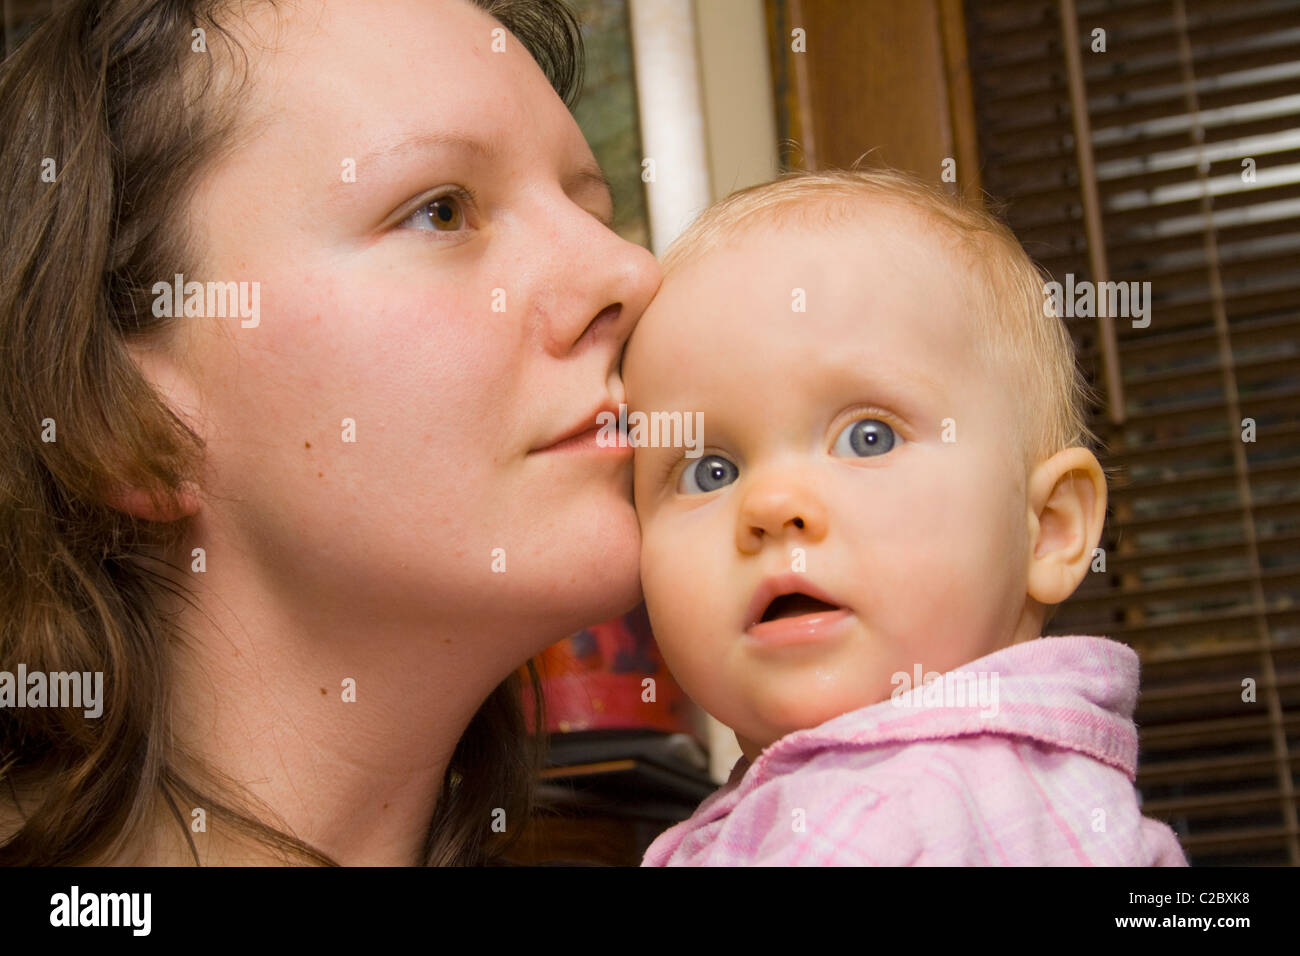 Mother age 29 cherishing her baby daughter. St Paul Minnesota MN USA Stock Photo